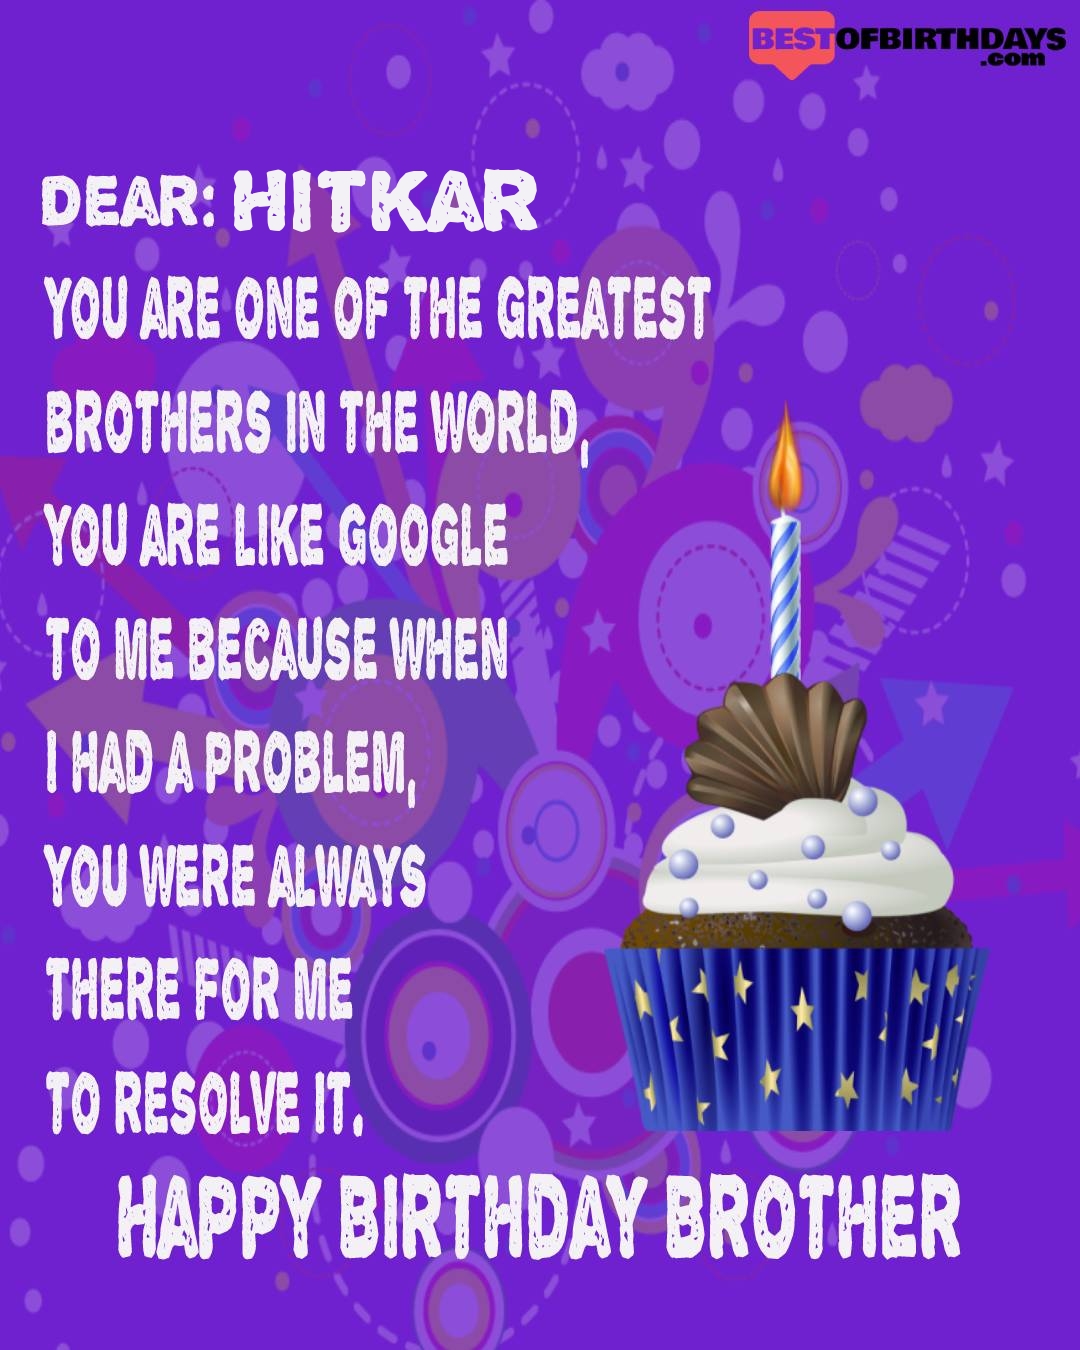 Happy birthday hitkar bhai brother bro